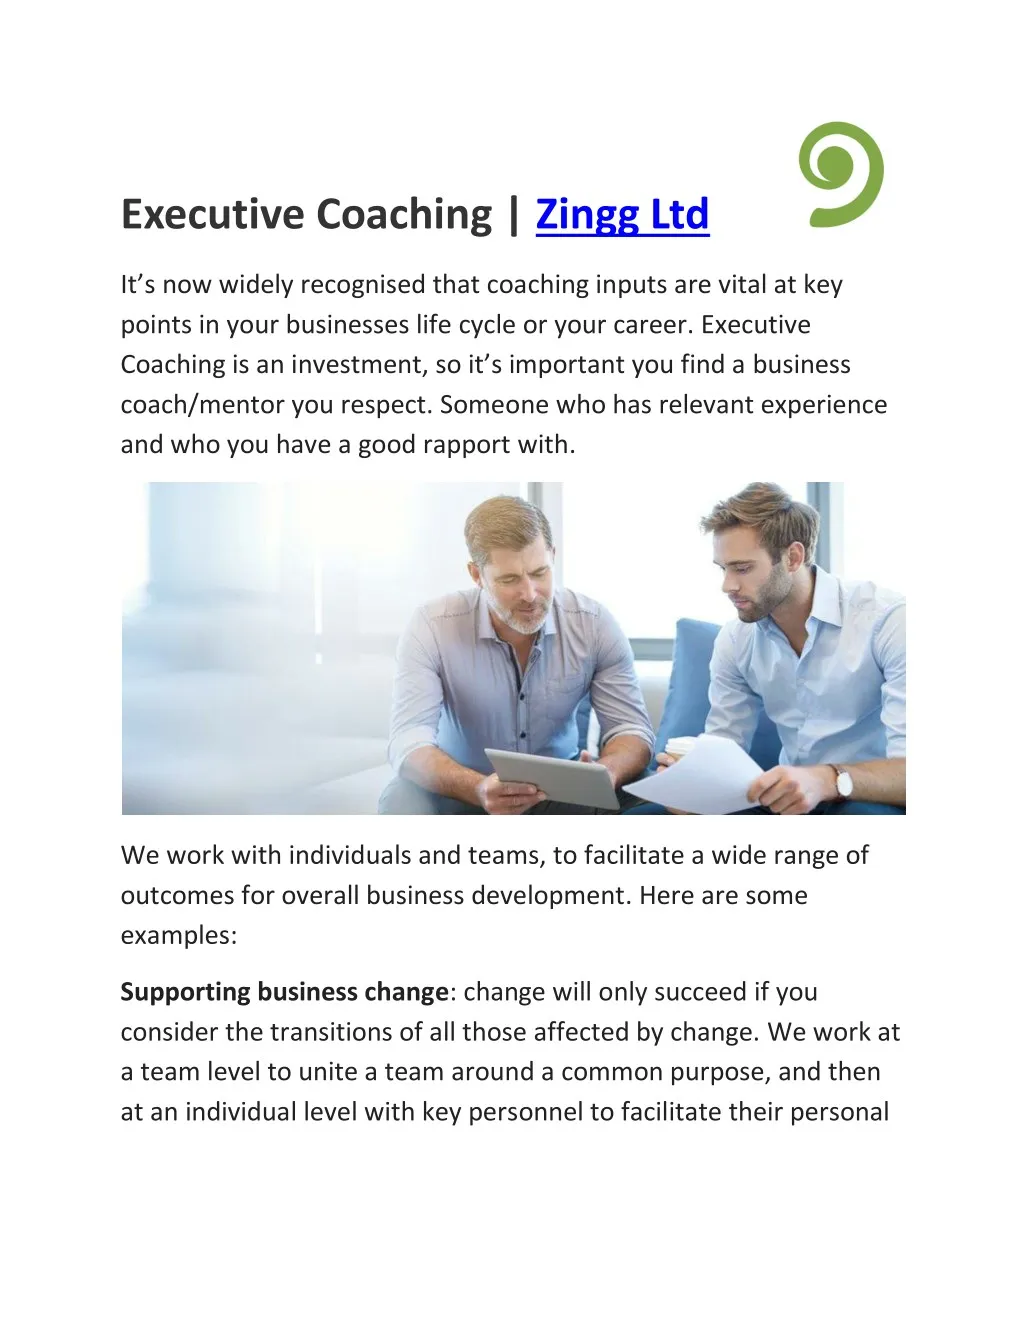 executive coaching zingg ltd